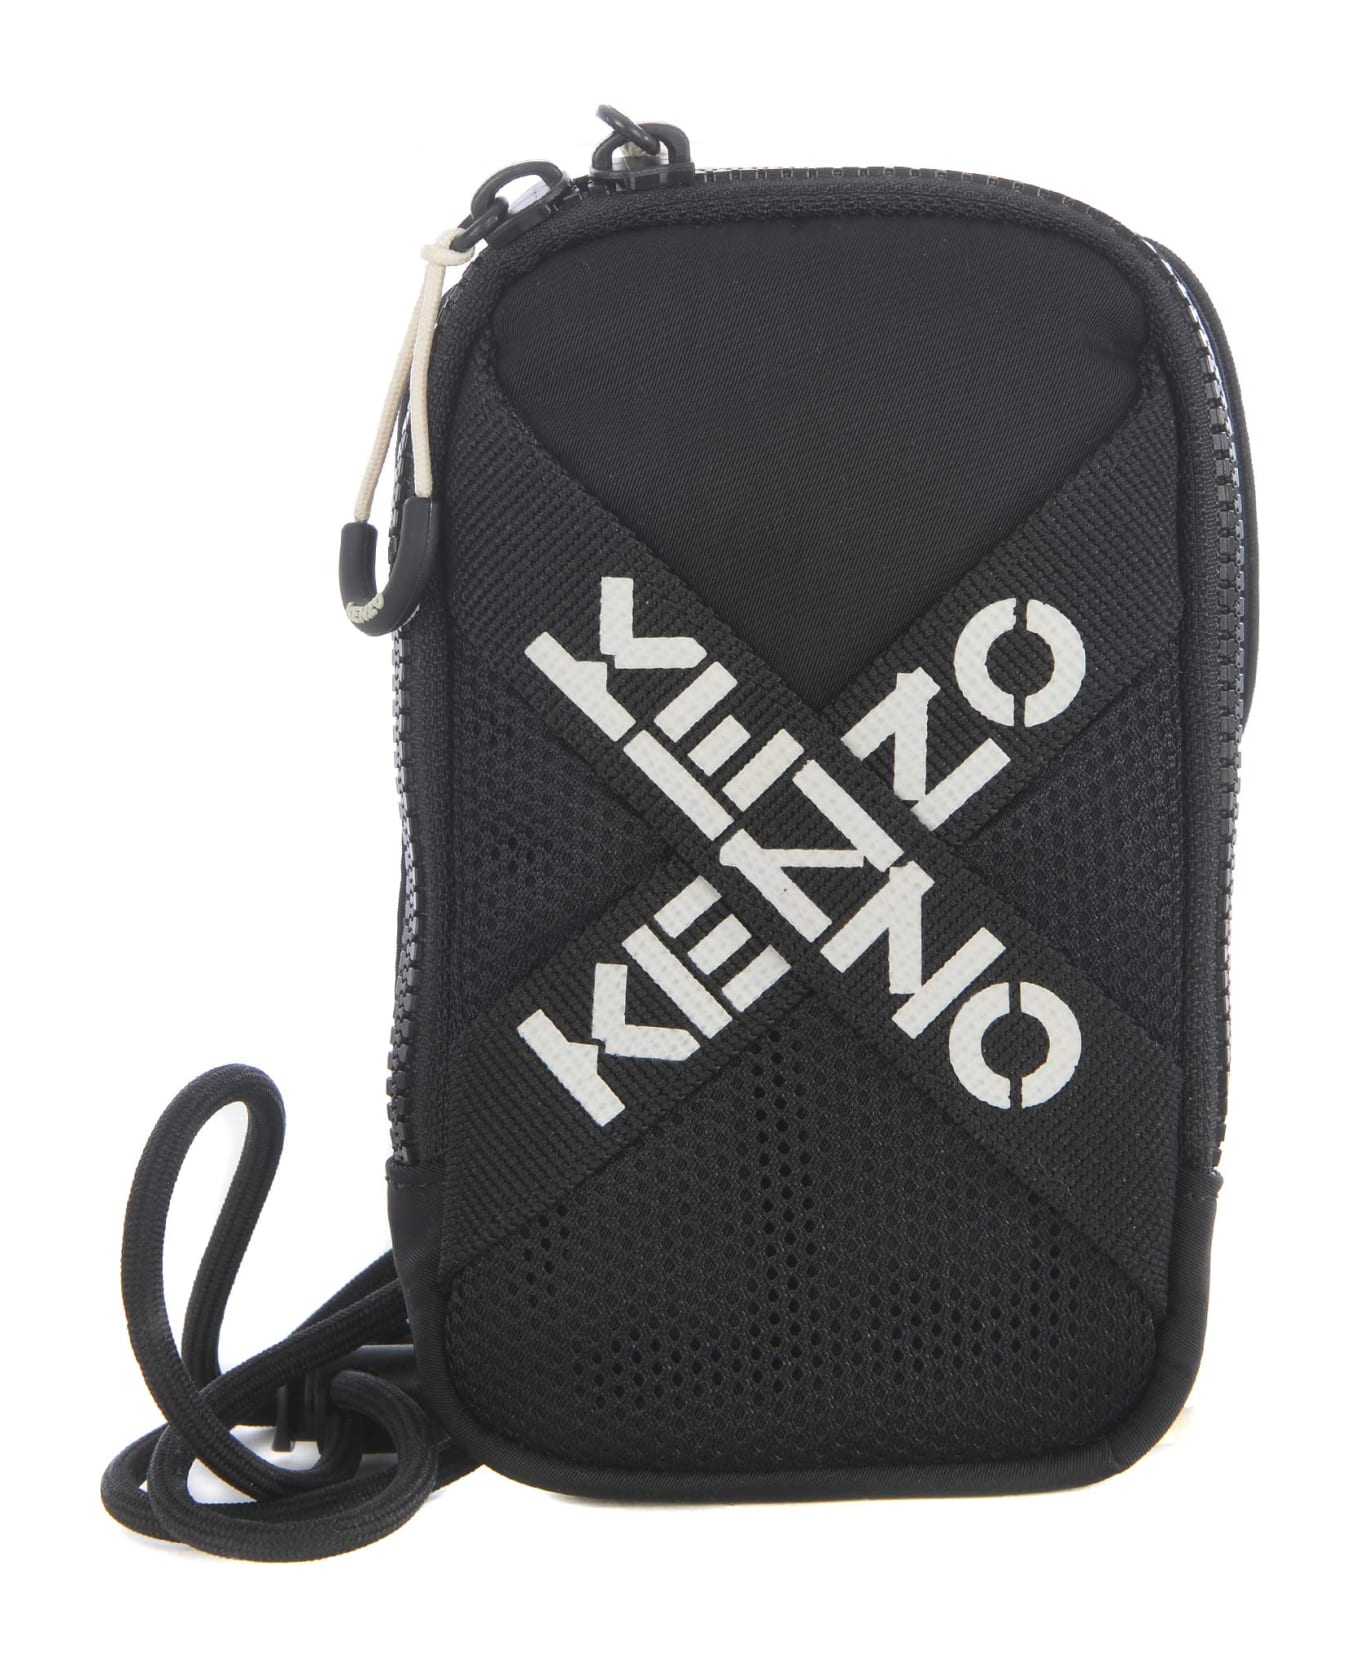 Kenzo "big X" Phone Holder In Nylon - Nero デジタルアクセサリー